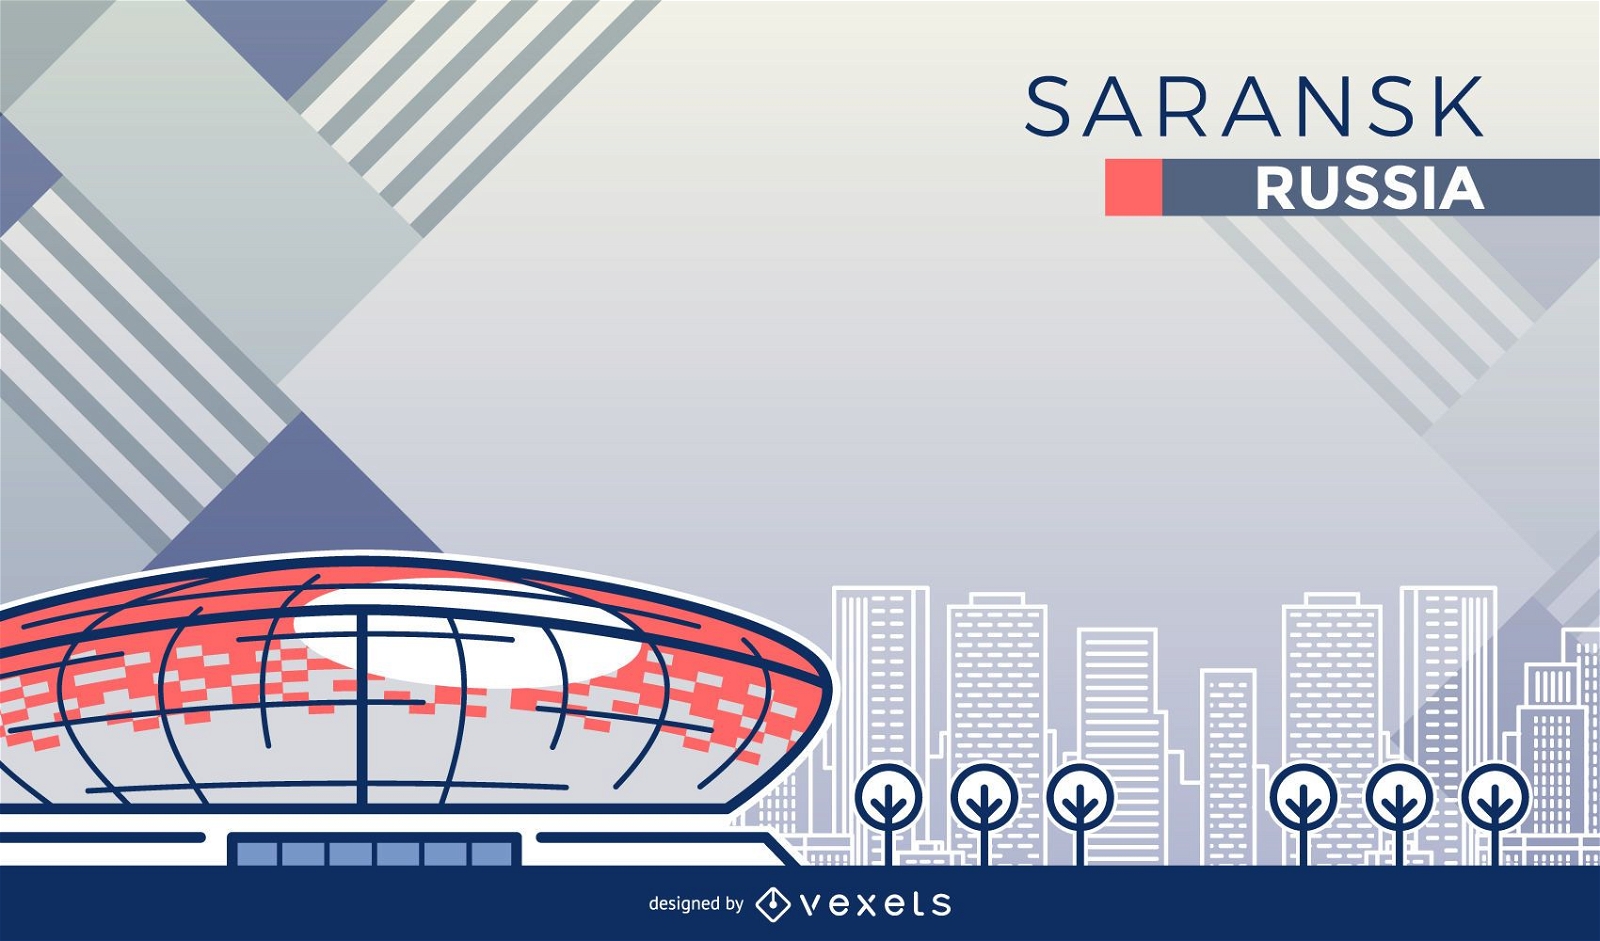 Saransk football stadium cartoon